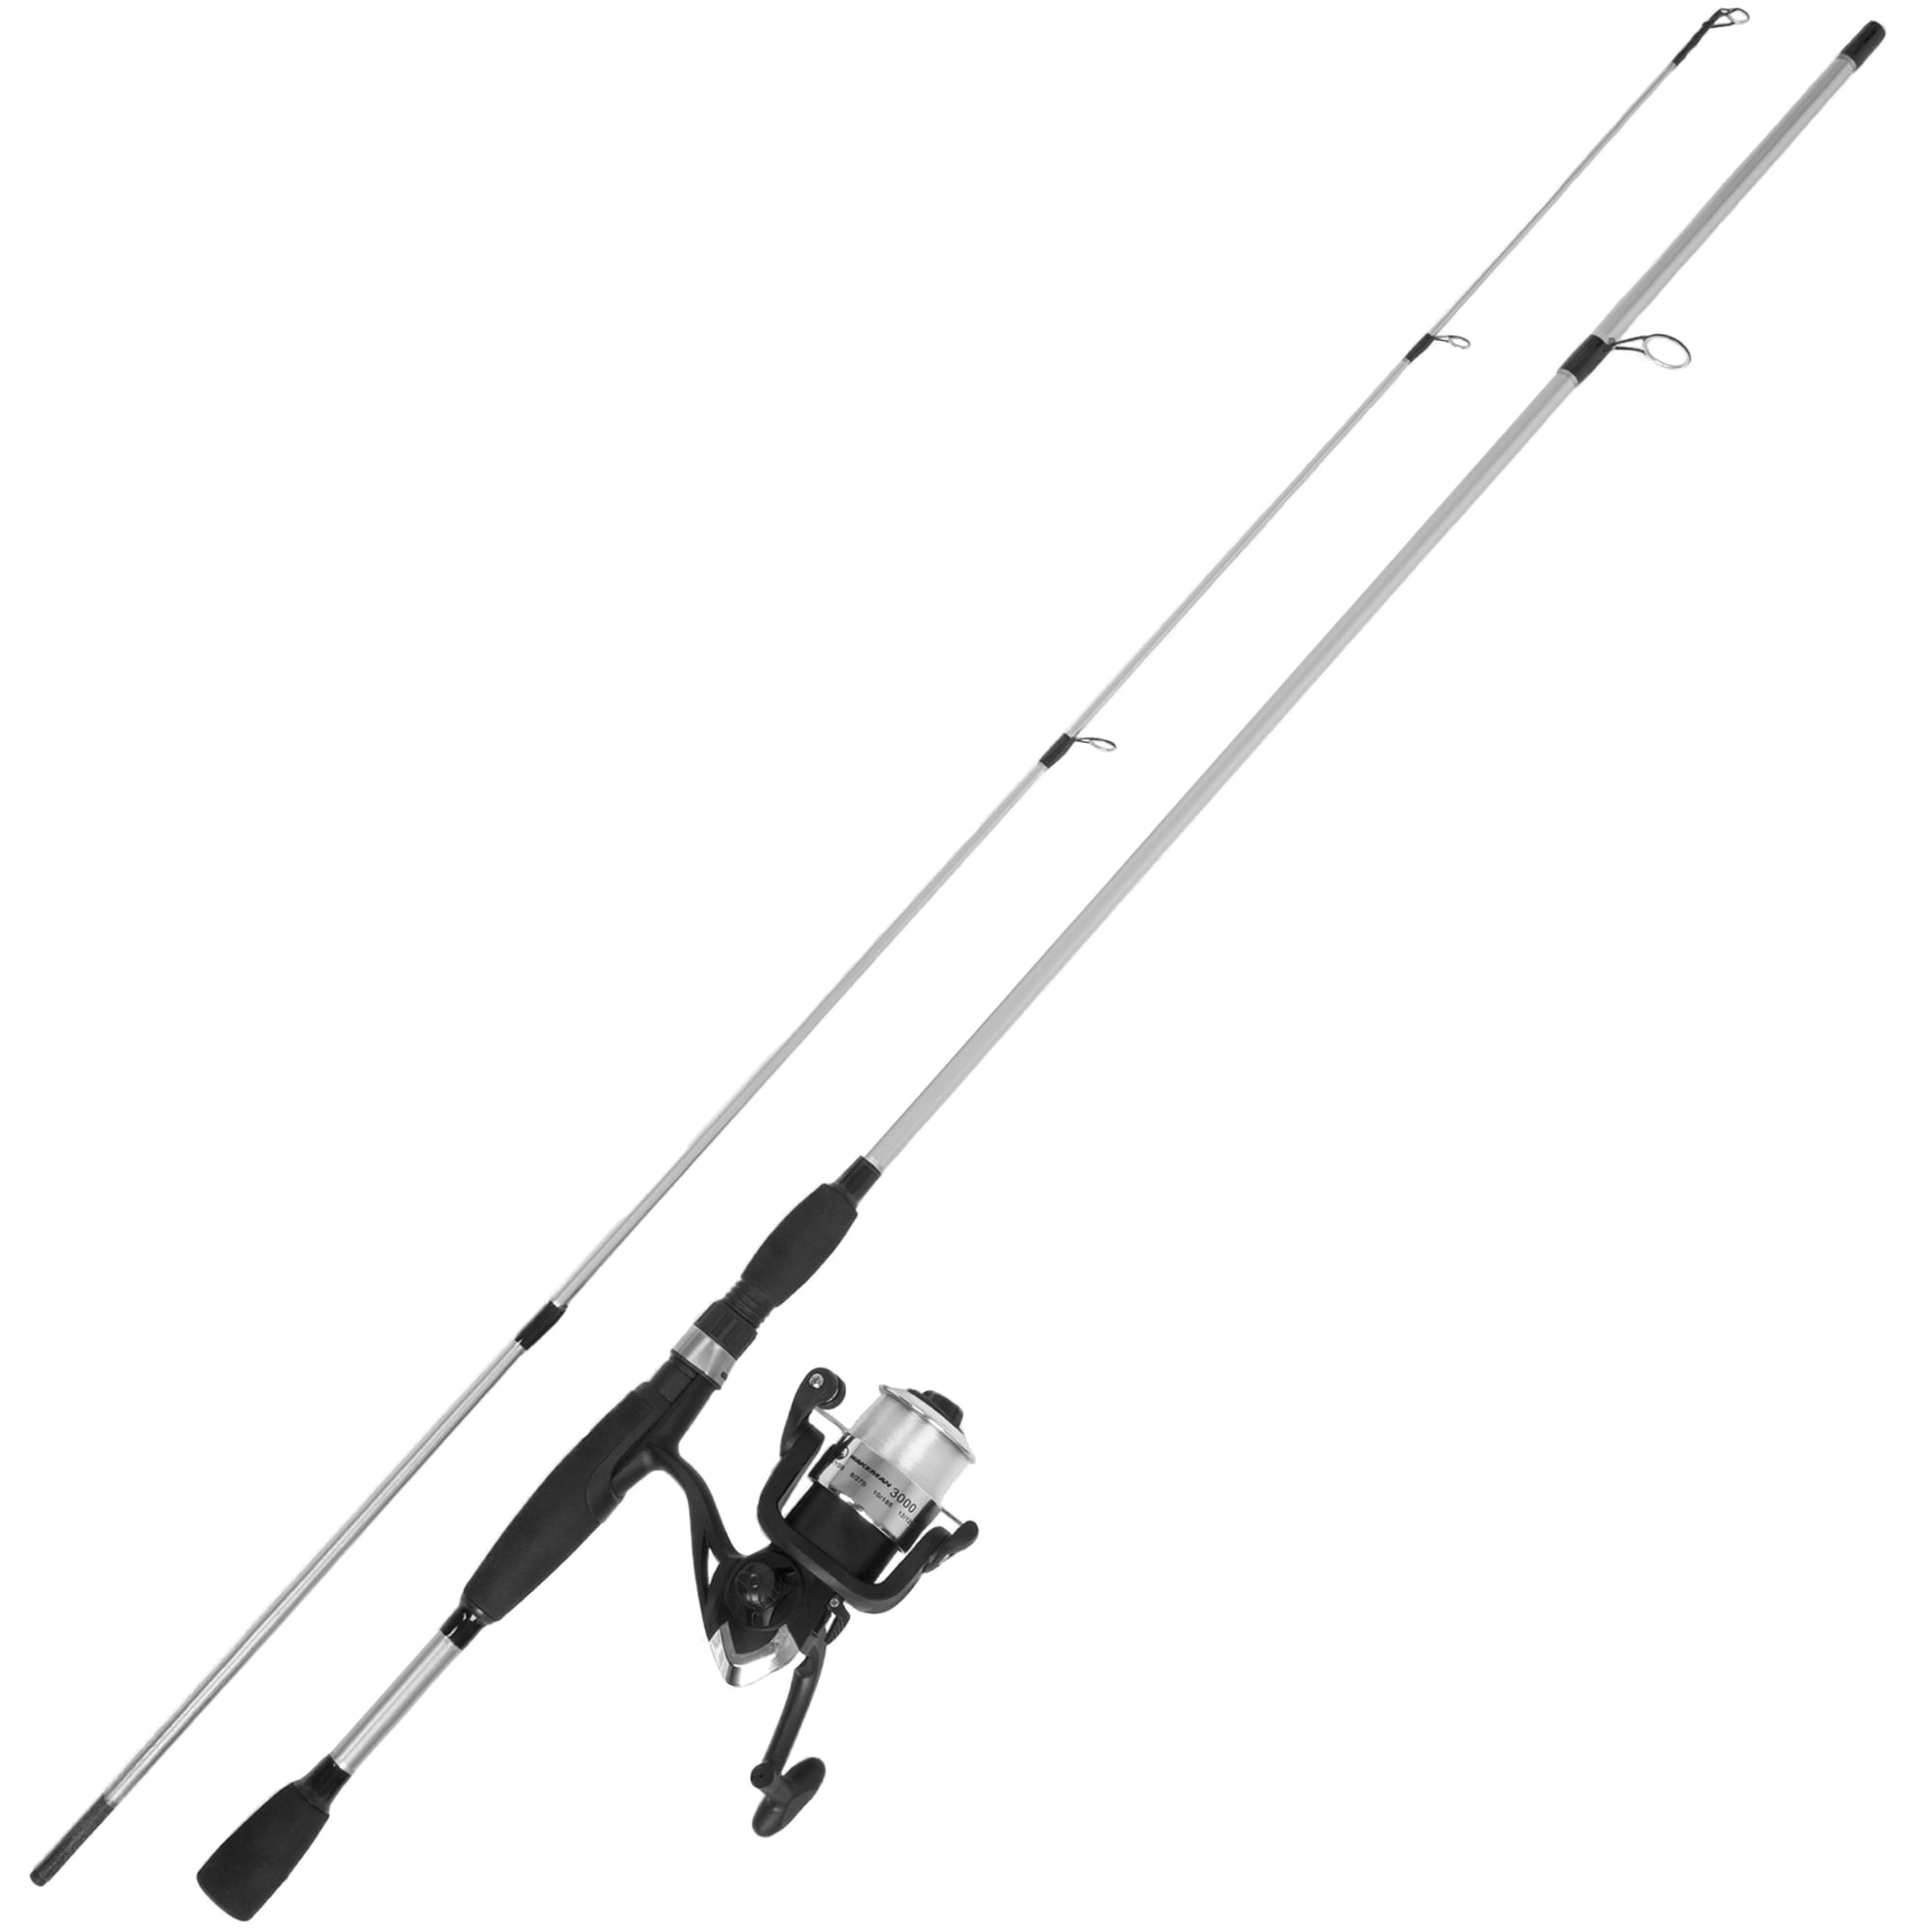 Spinning Reel Fishing Pole Bass and Trout Fishing, Gold – Lake Fishing 6.5  feet